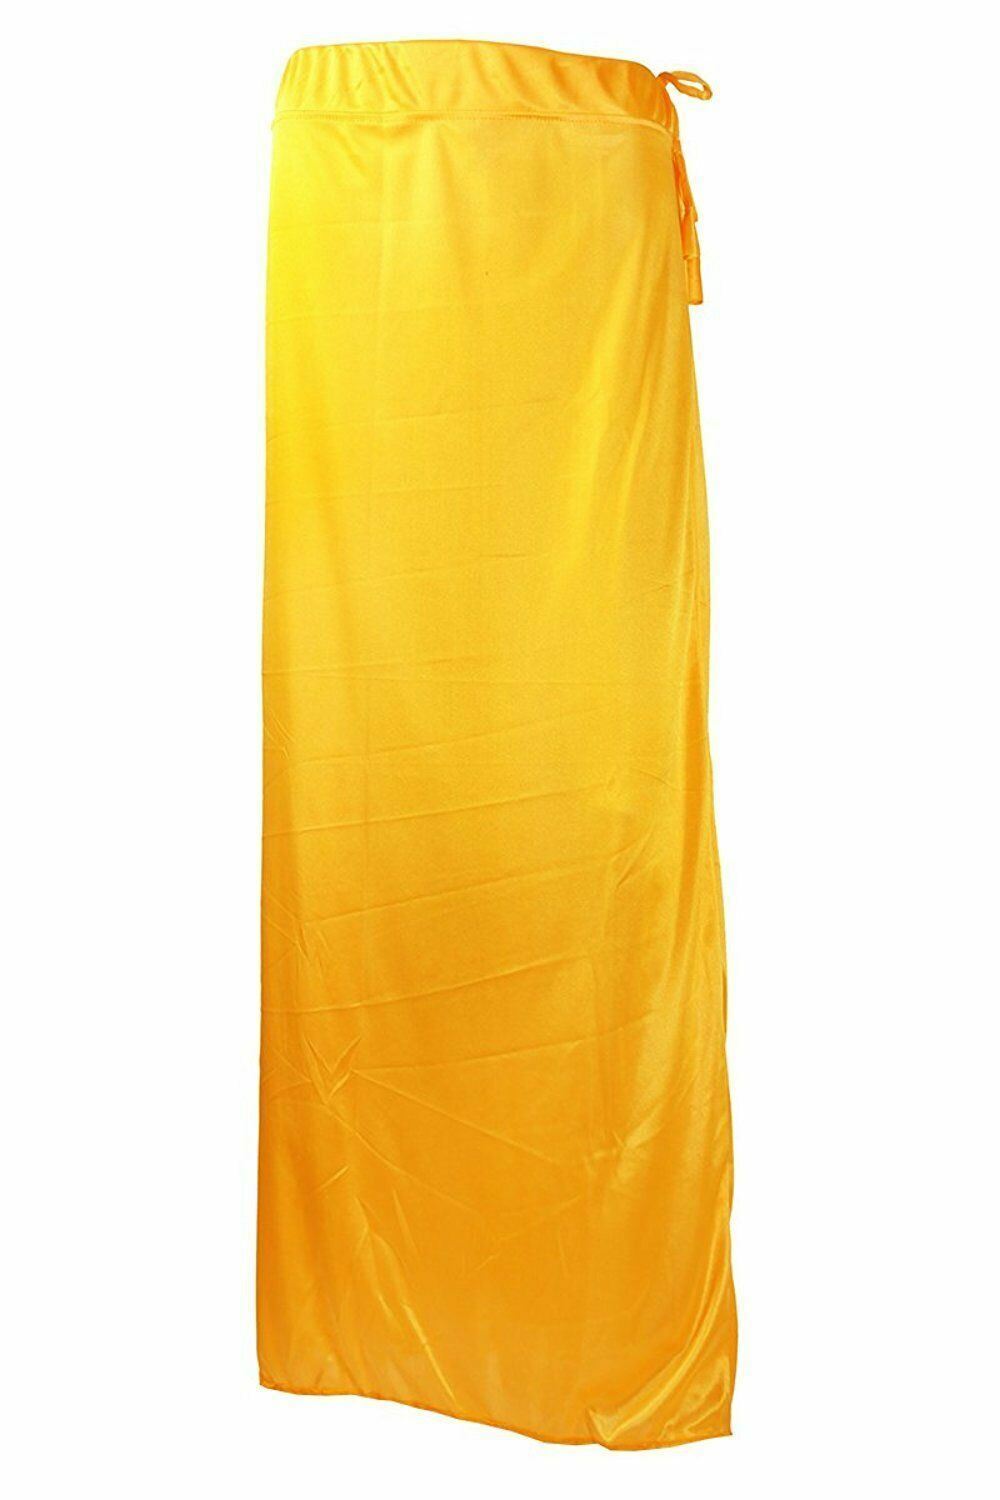 Yellow Satin Sari Petticoat, Saree Inskirt, Saree Petticoat, Indian Sari Petticoat